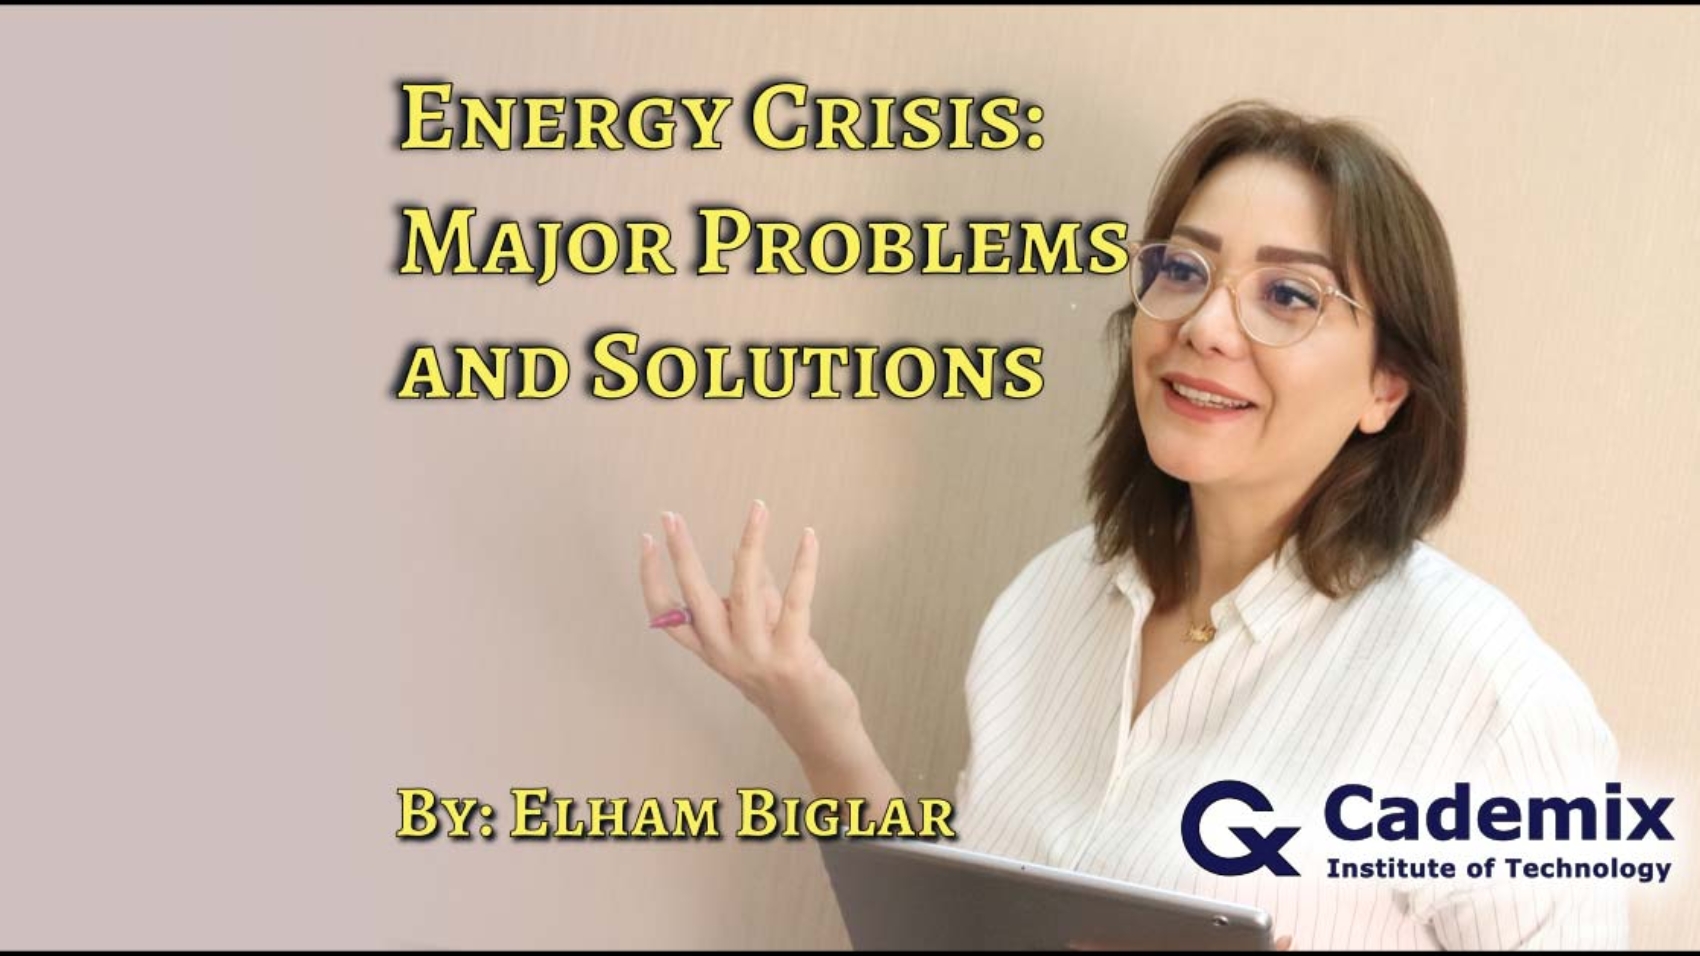 Elham Biglar Energy Crisis Major problems and solutions Cademix Magazine Article